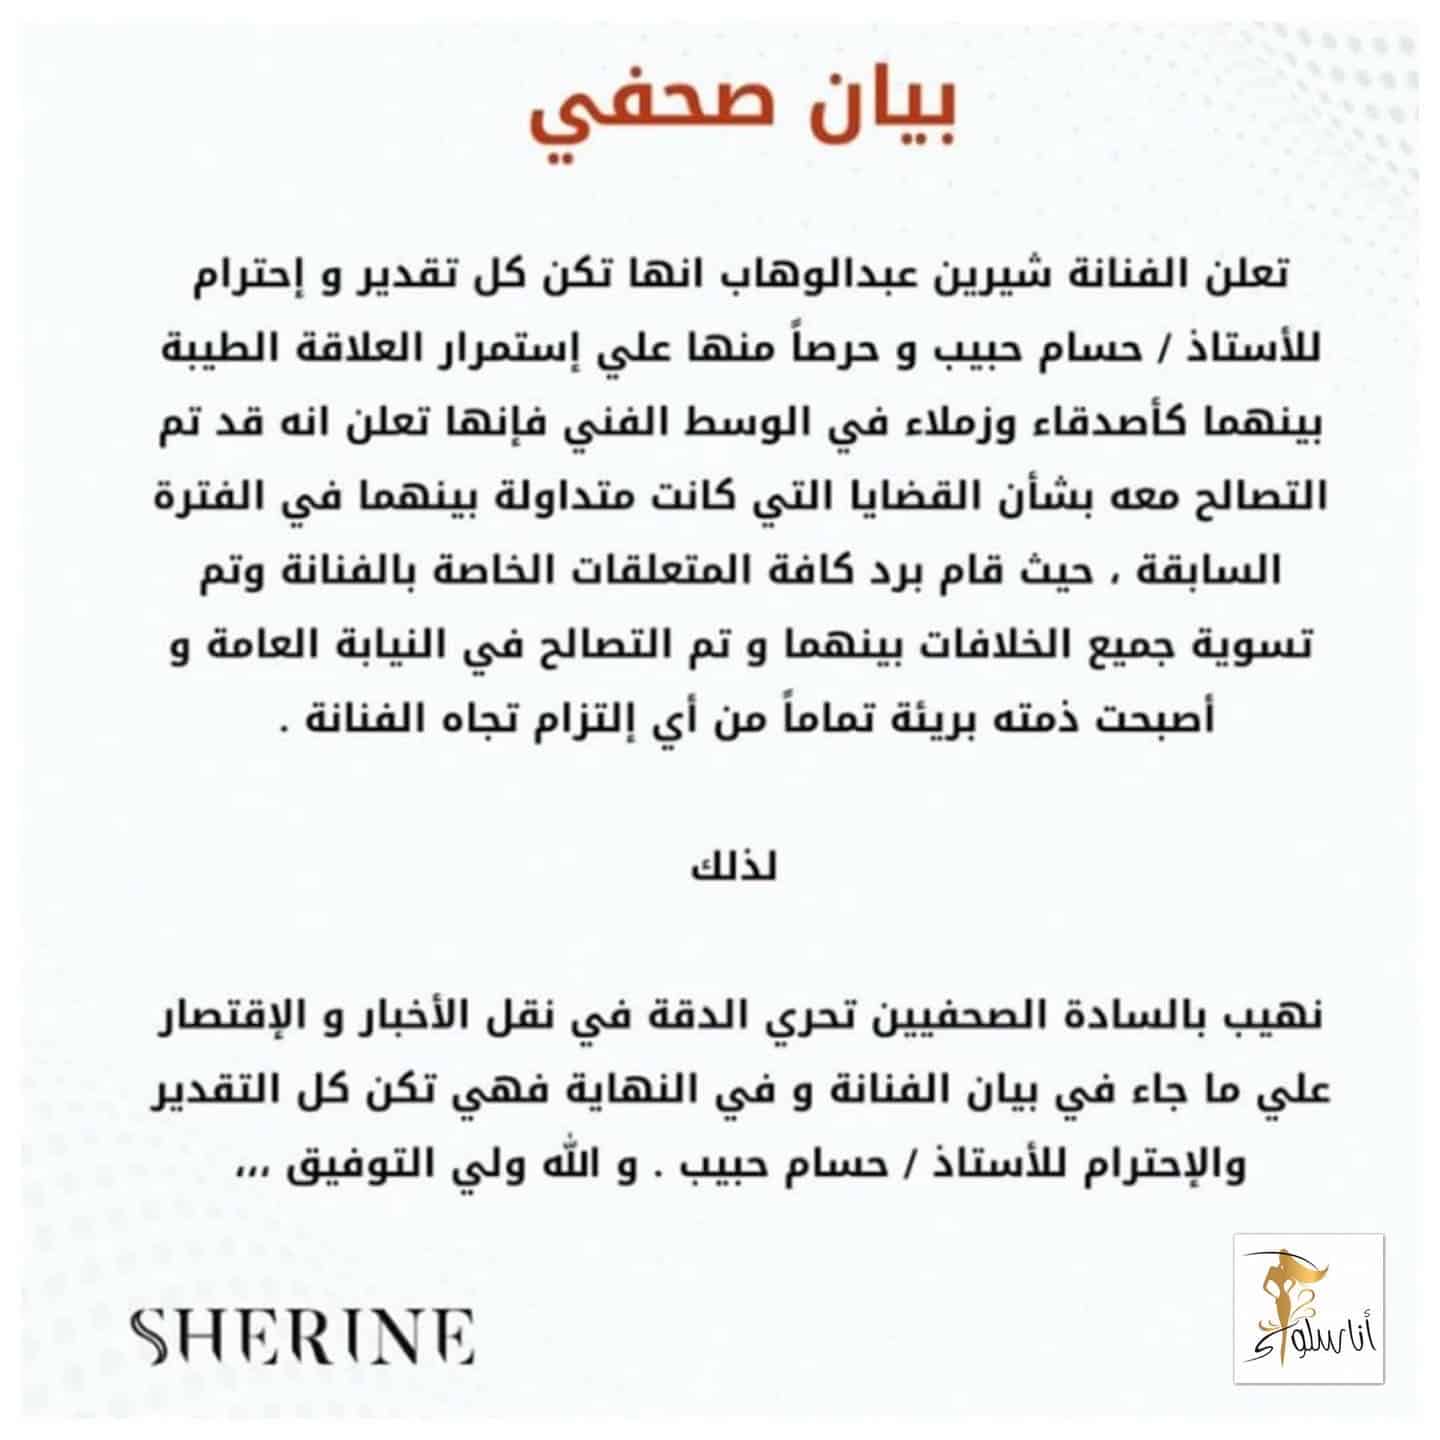 Rekonsiliasi Sherine Abdel Wahab sareng Hussam Habib